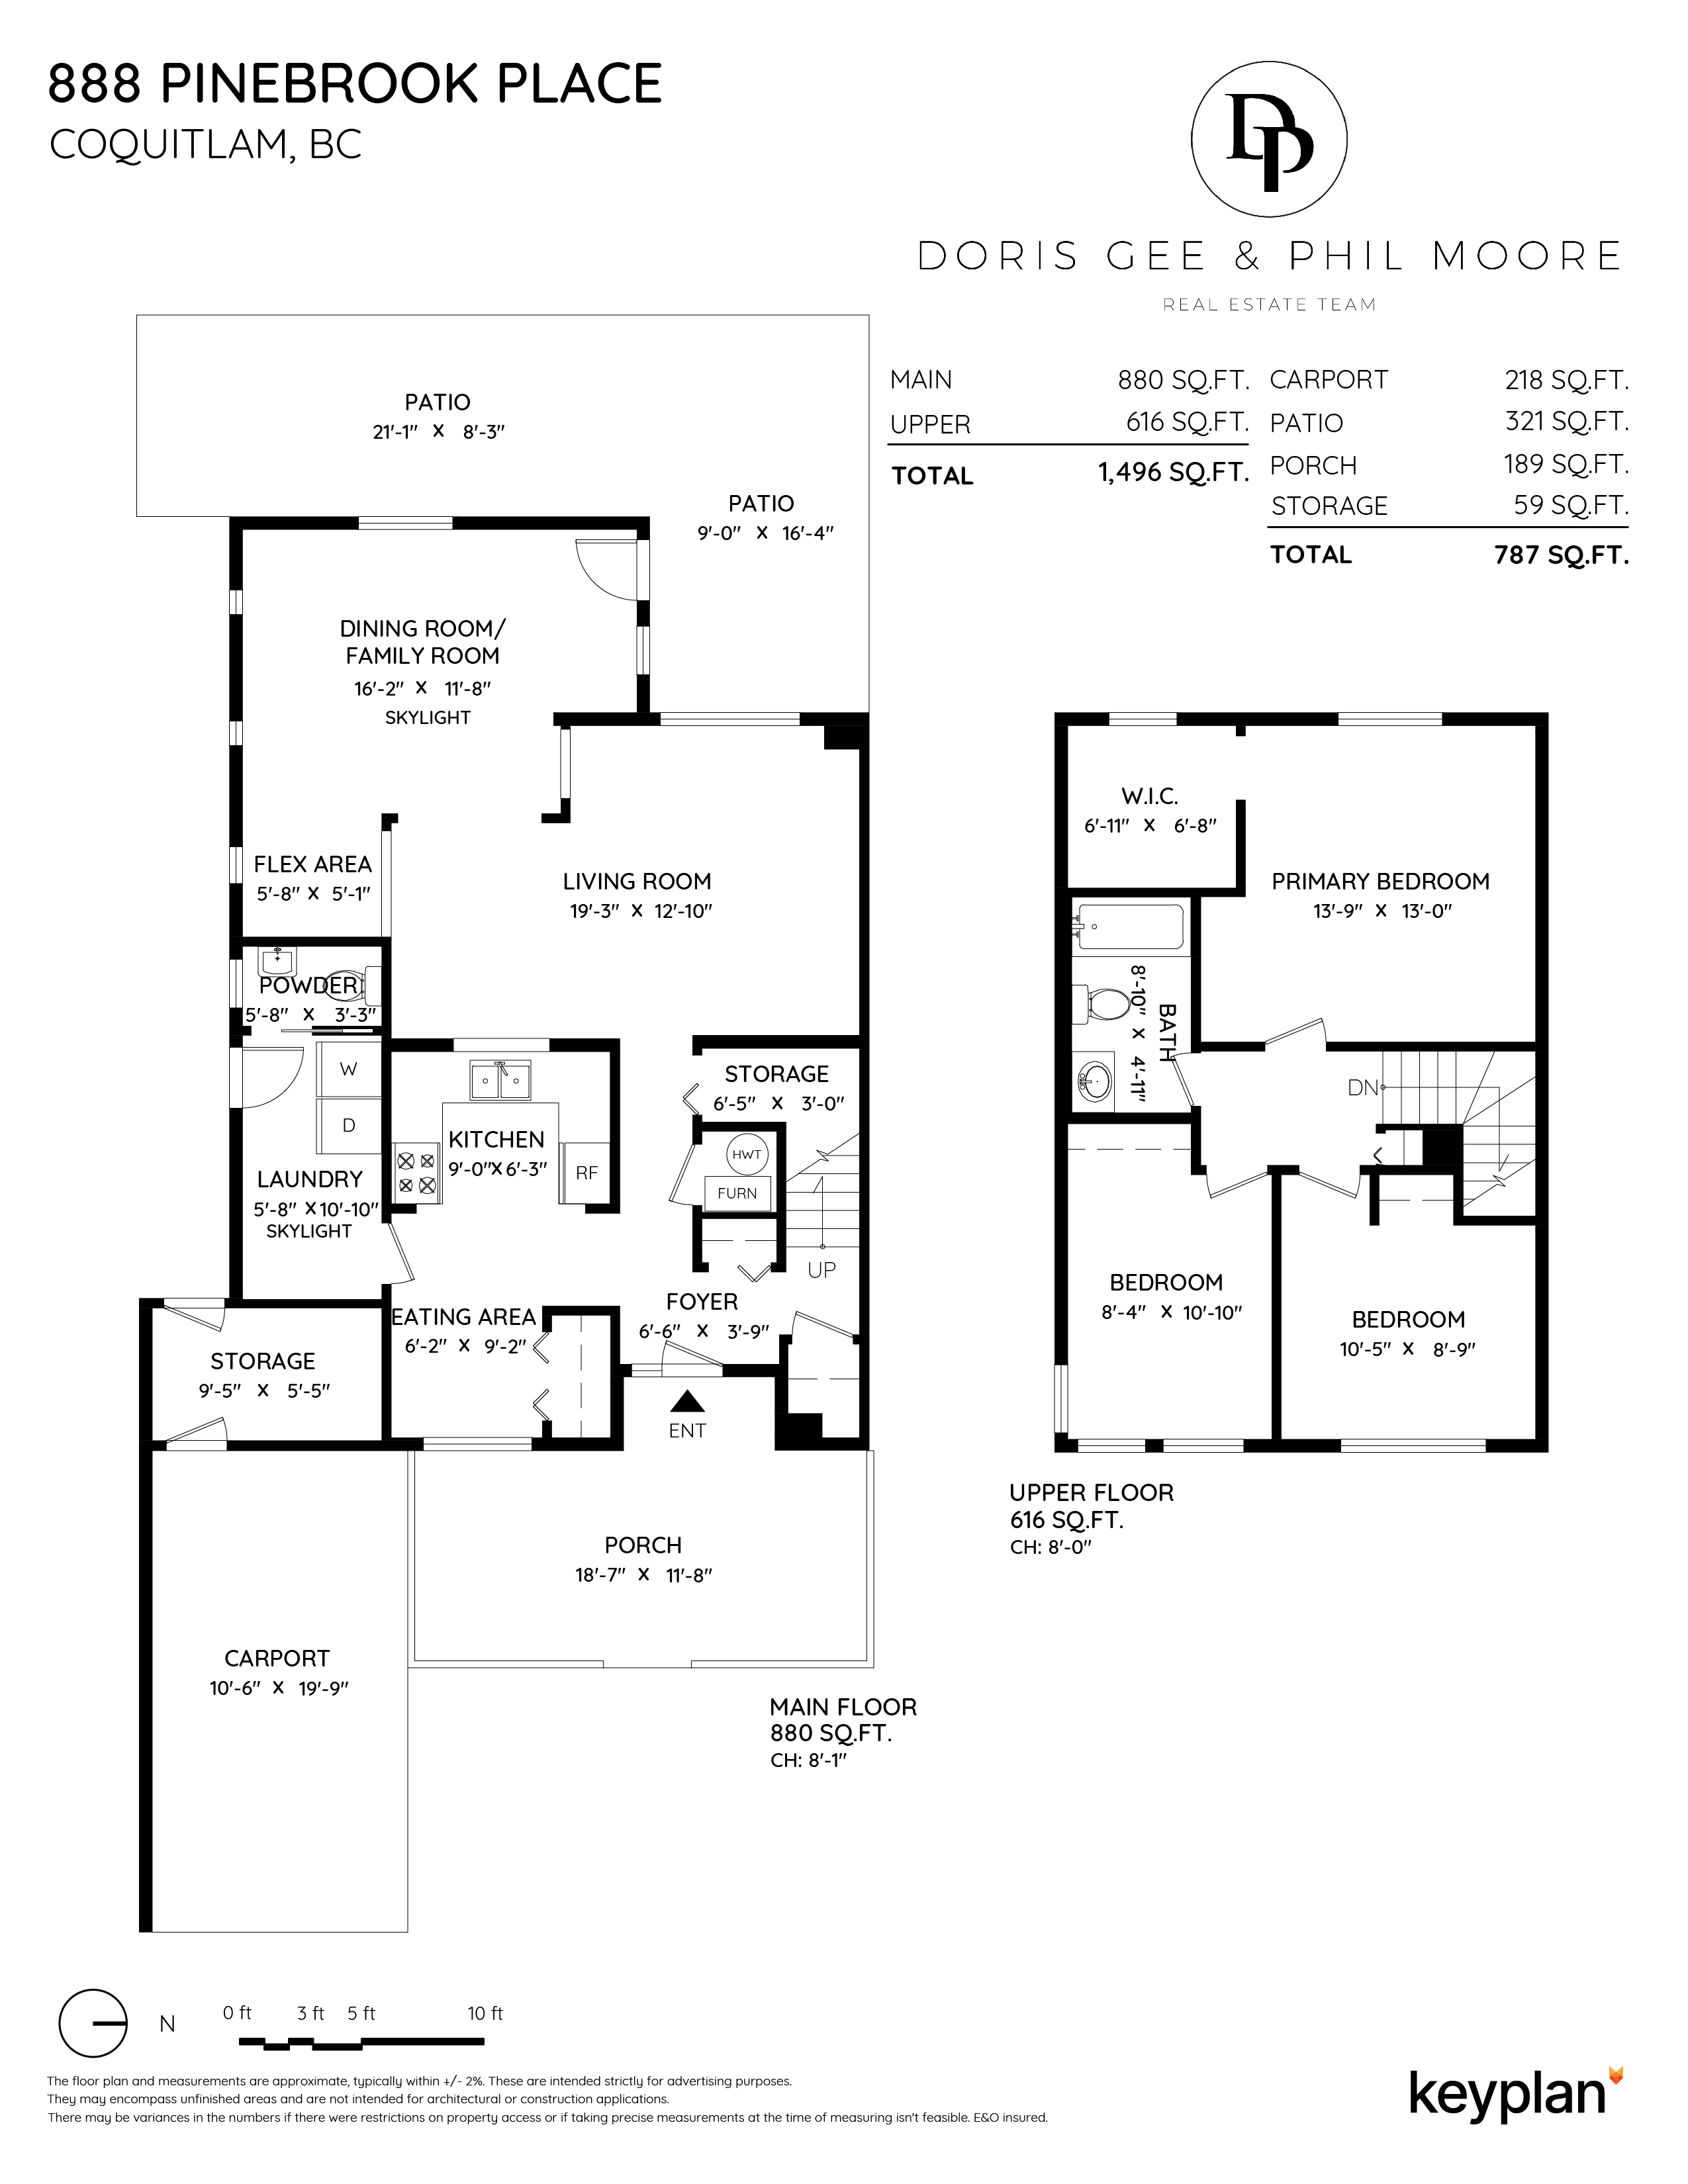 Doris Gee & Phil Moore - 888 Pinebrook Place, Coquitlam, BC, Canada | Floor Plan 1